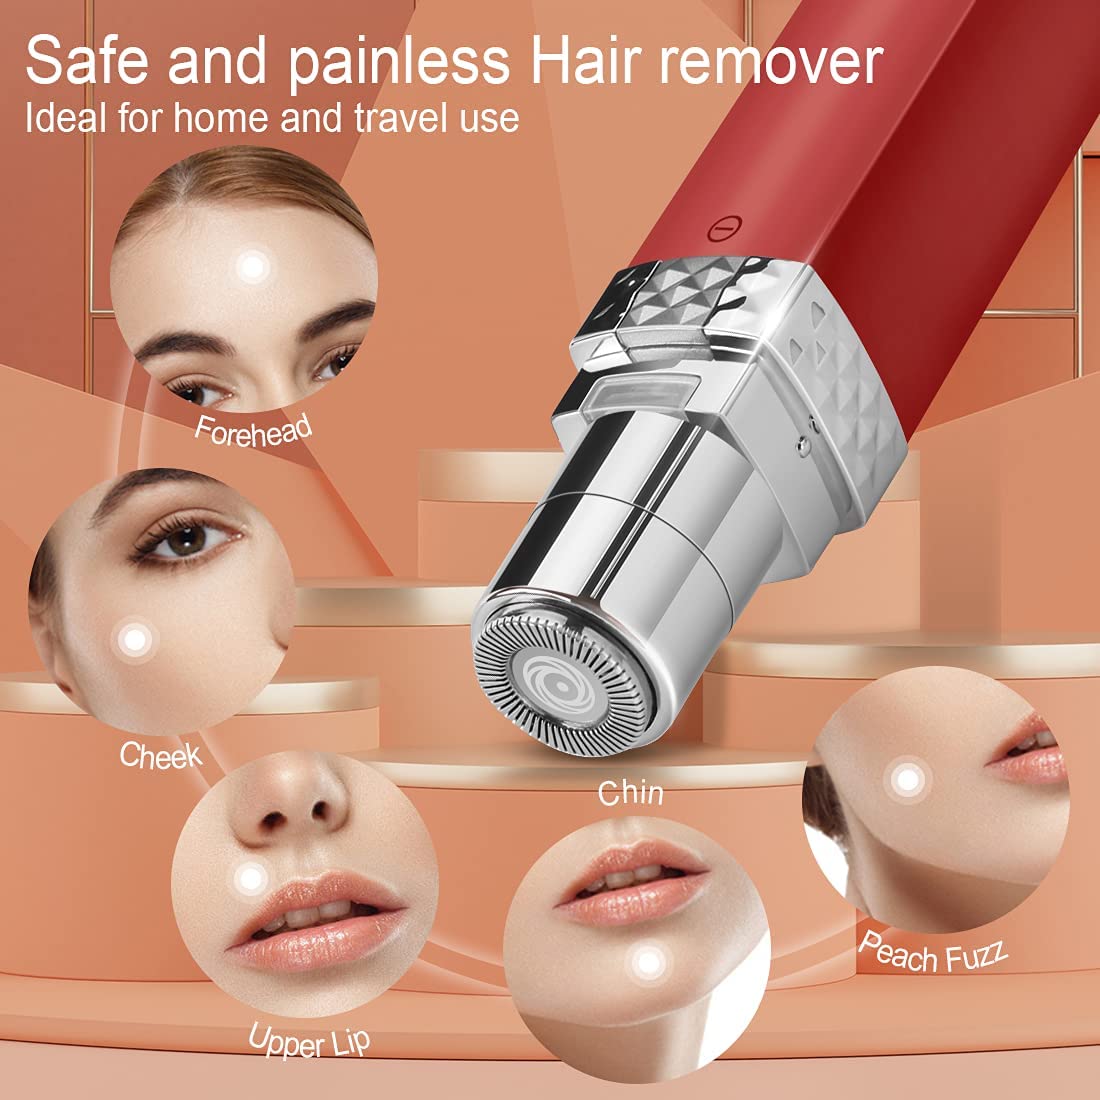 KSkin Facial Hair Removal for Women, Painless Hair Remover Waterproof Face Shaver, Women's Facial Hair Epilator for Upper Lip Peach Fuzz Fine Hair Chin 